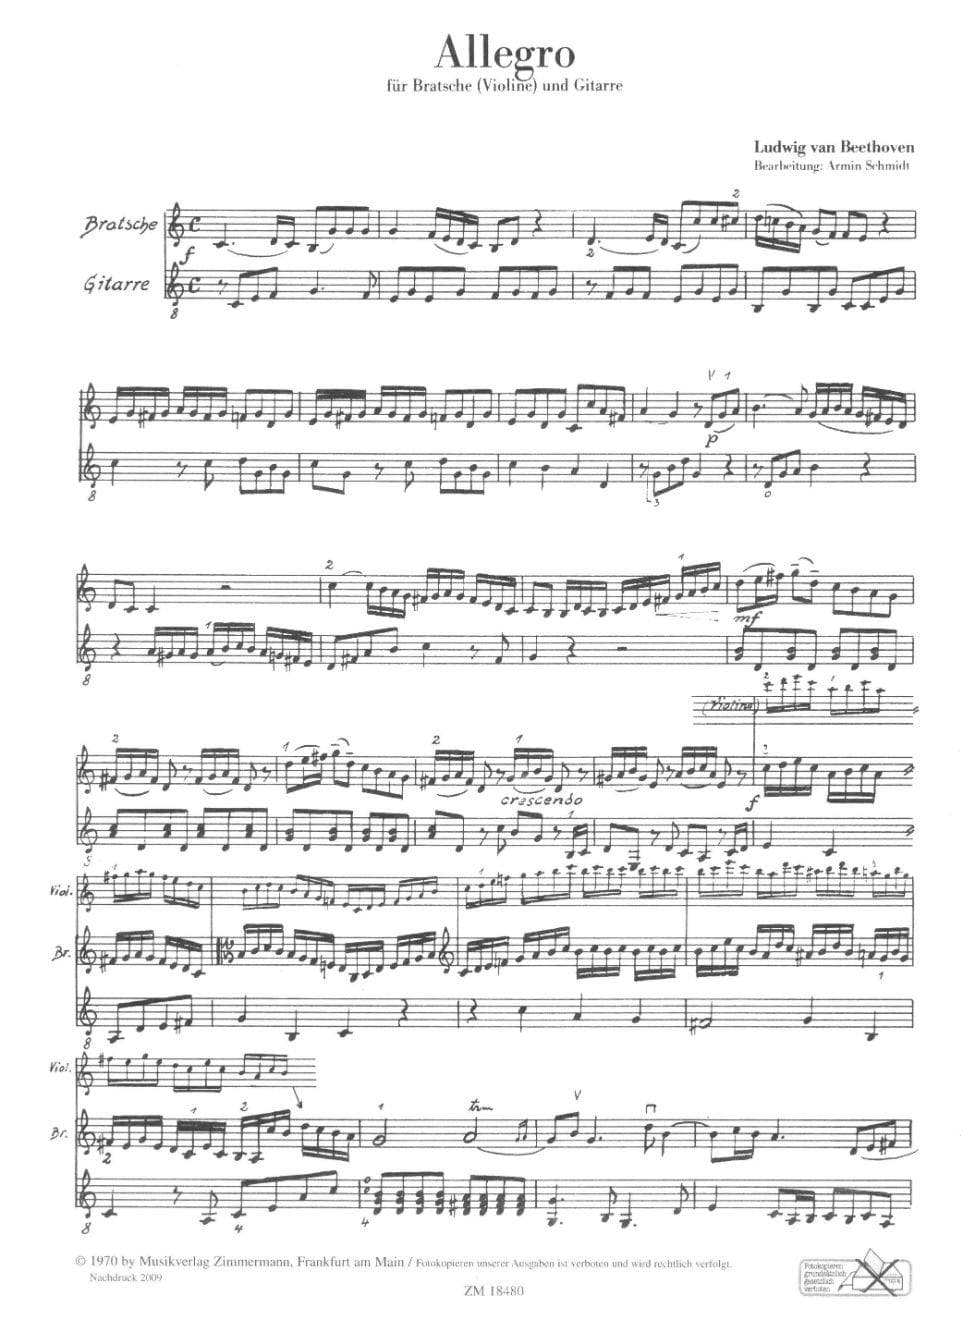 Beethoven, Ludwig - Allegro WoO 33 for Viola (Violin) and Guitar - Arranged by Schmidt - Wilhelm Zimmermann Publication